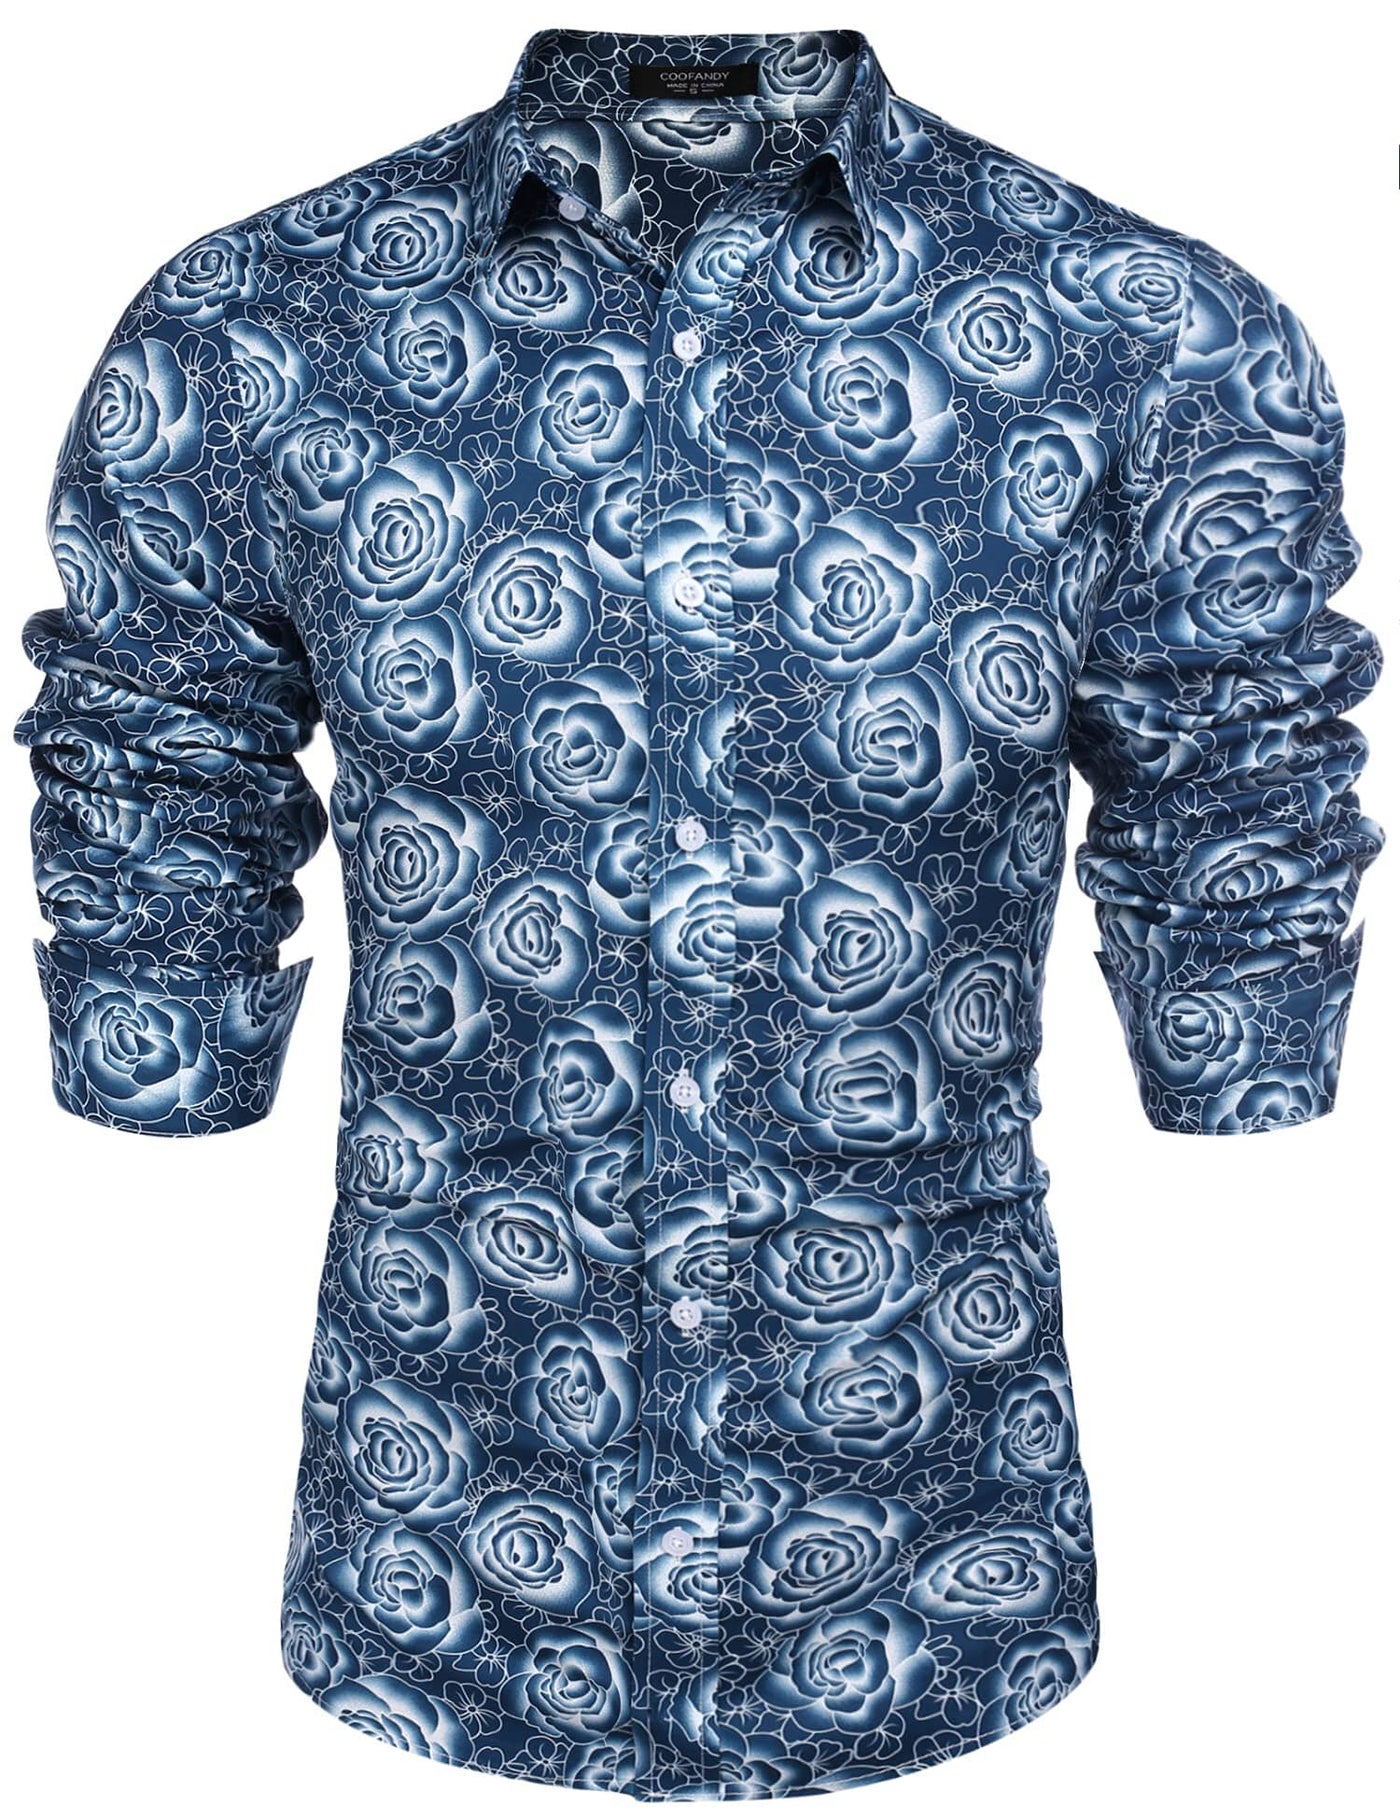 Floral Hawaiian Tropical Button Down Beach Shirt (US Only) Shirts coofandy Blue Rose S 